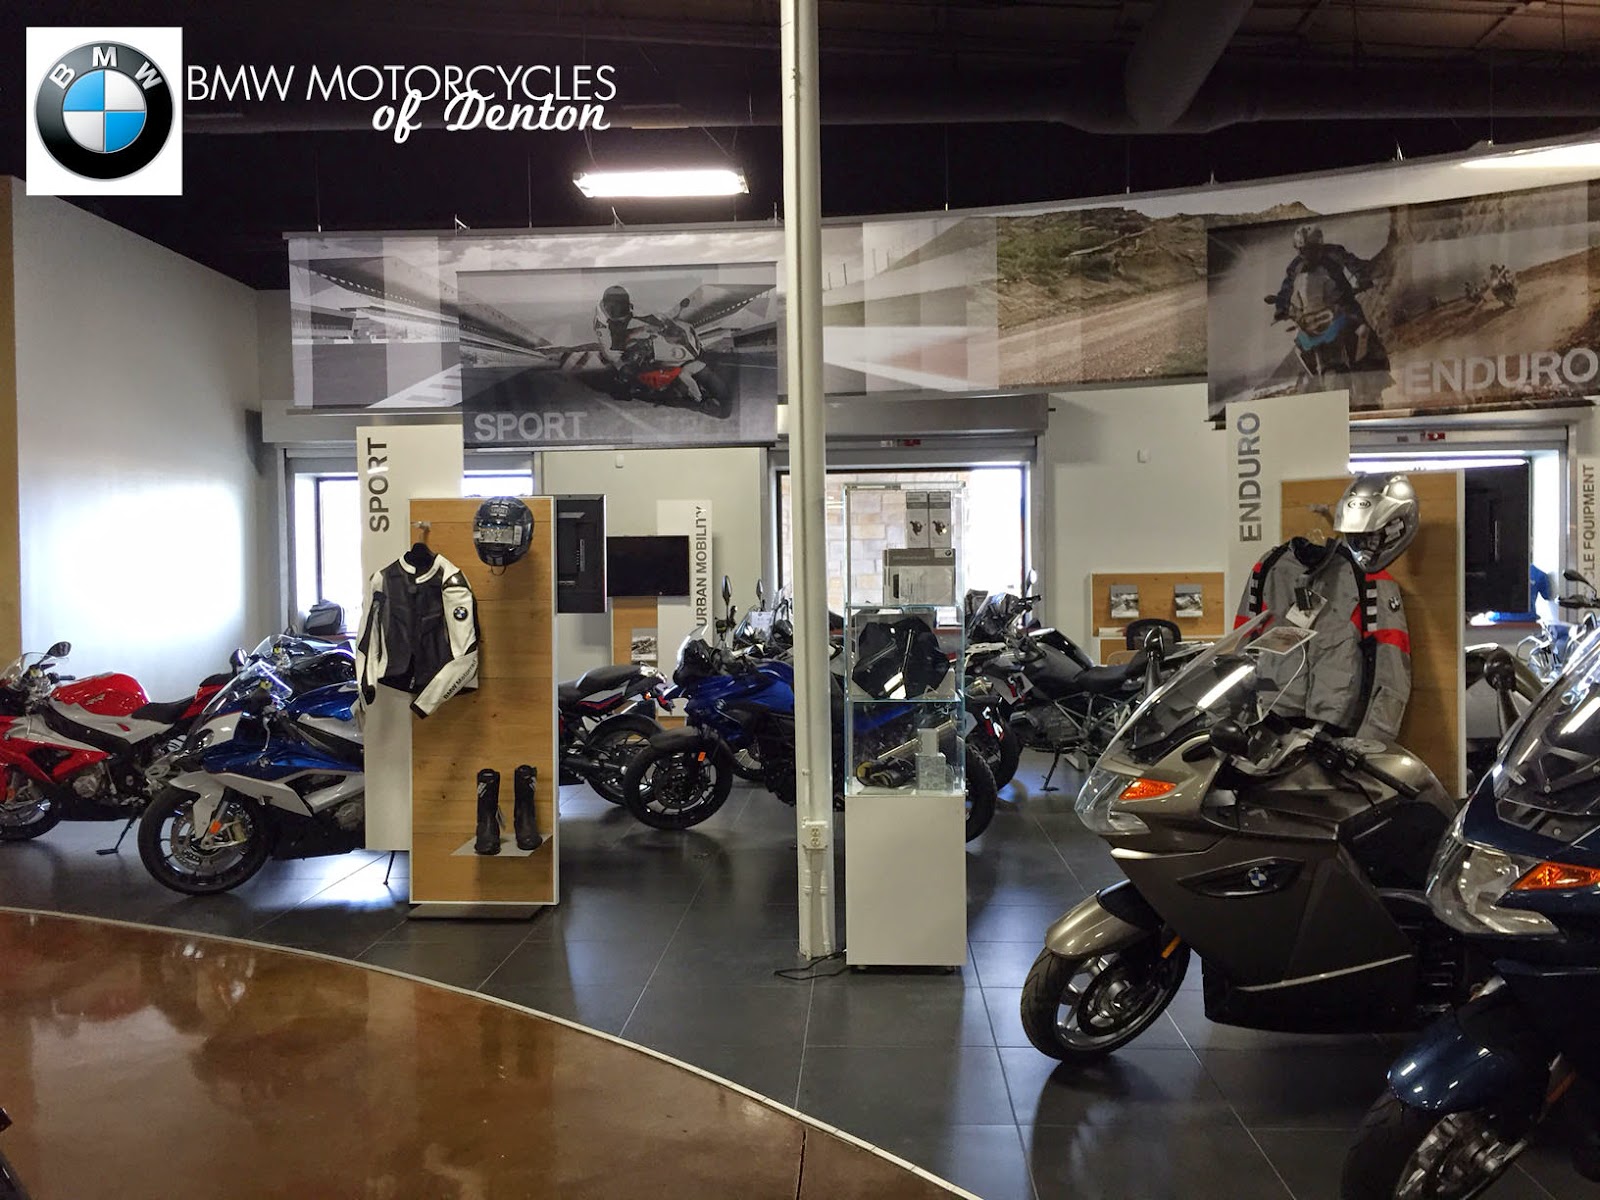 BMW Motorcycles of Denton: We are DFW's newest BMW Motorrad Dealership